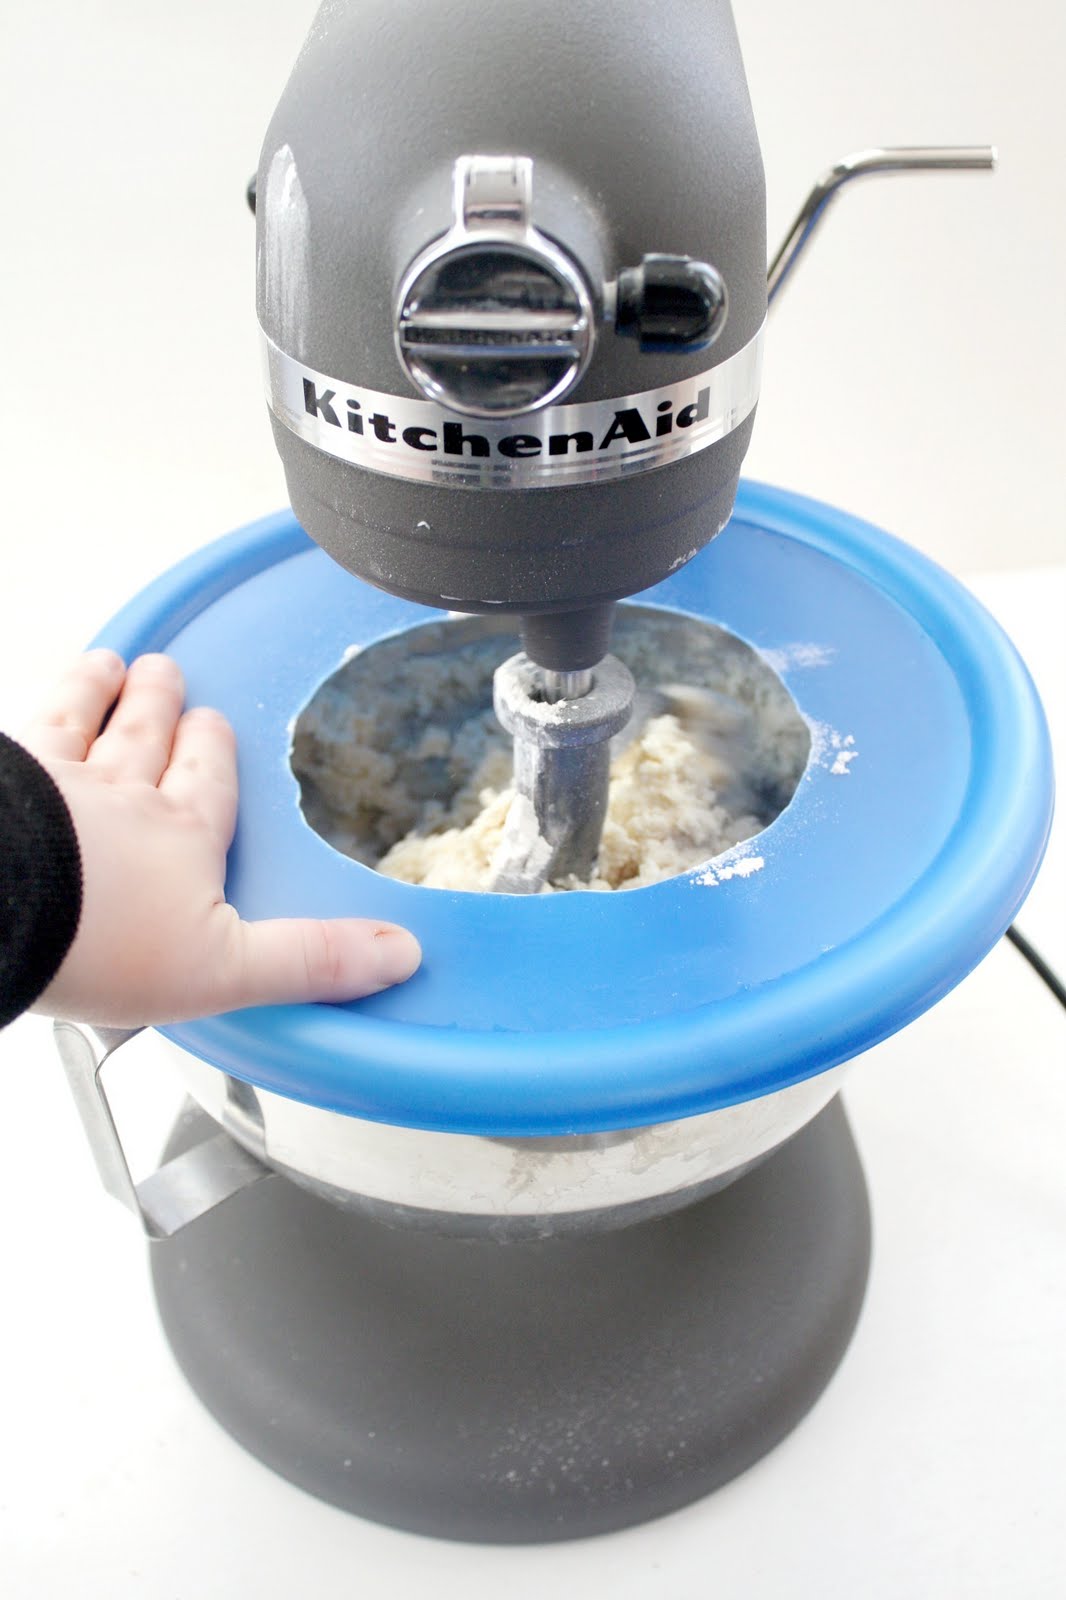 DIY Mixing bowl splatter guard? - Rich Products Malaysia